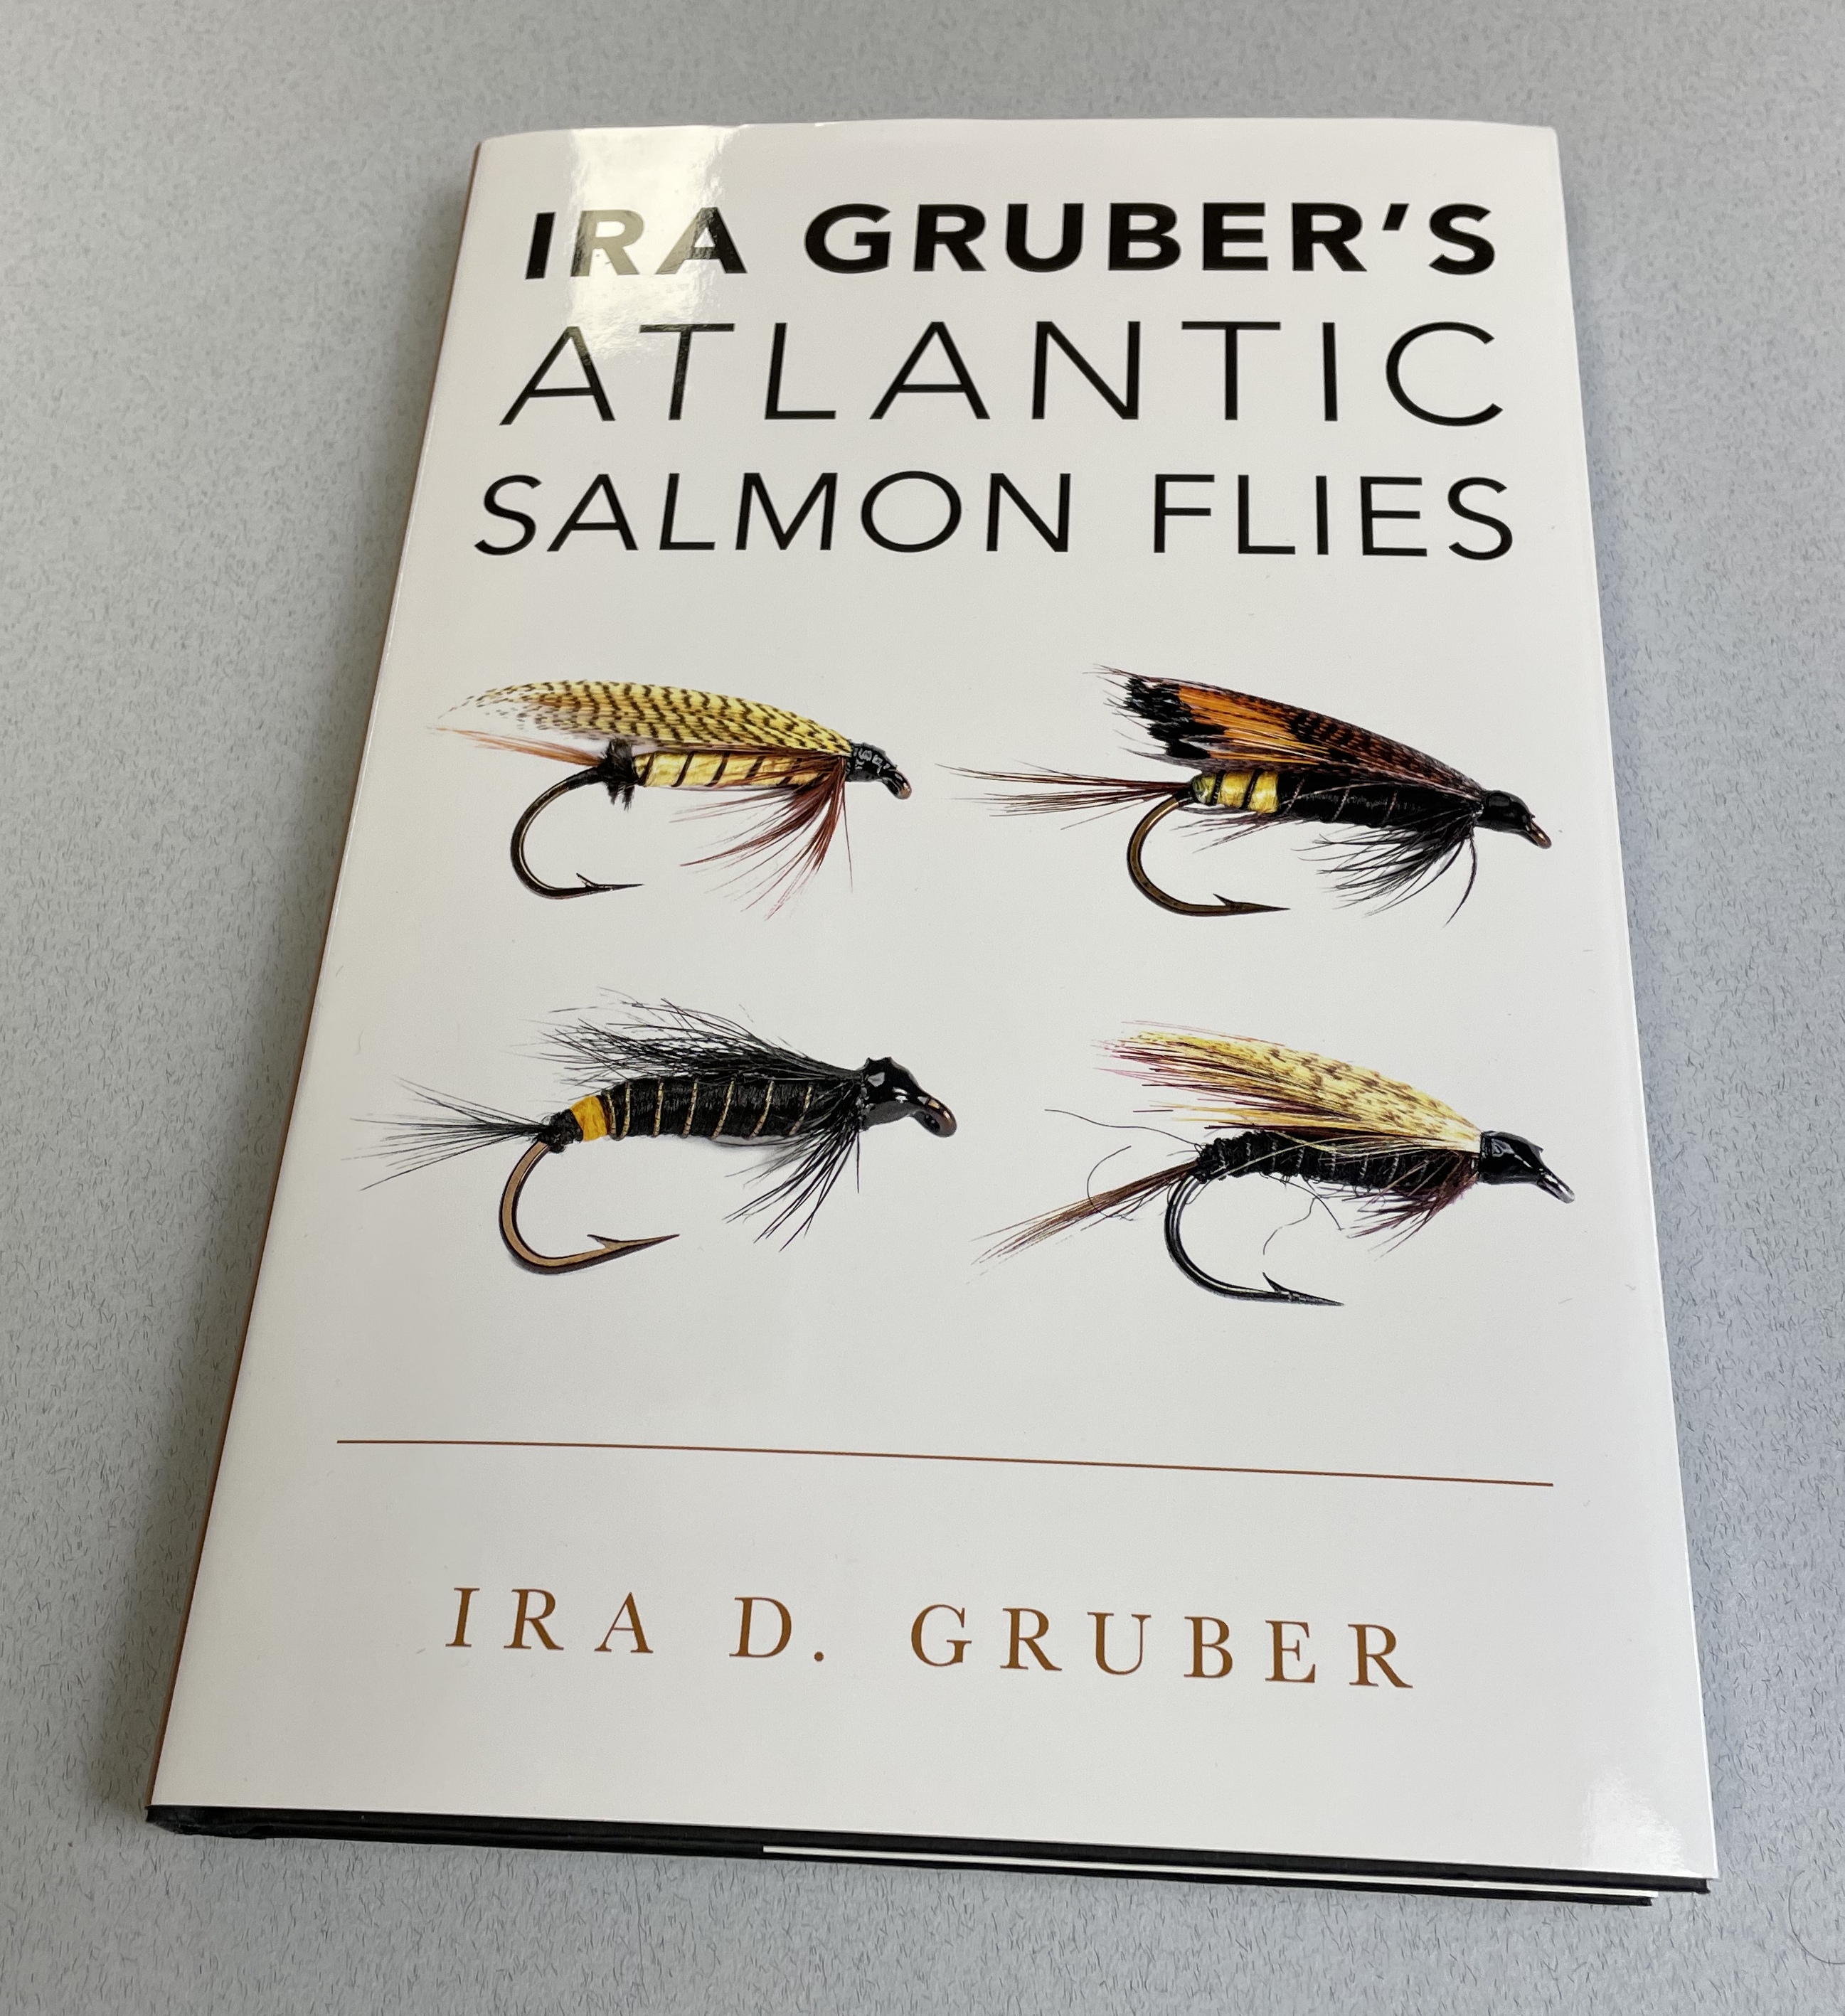 The River's Course: Ira Gruber's Atlantic Salmon Flies